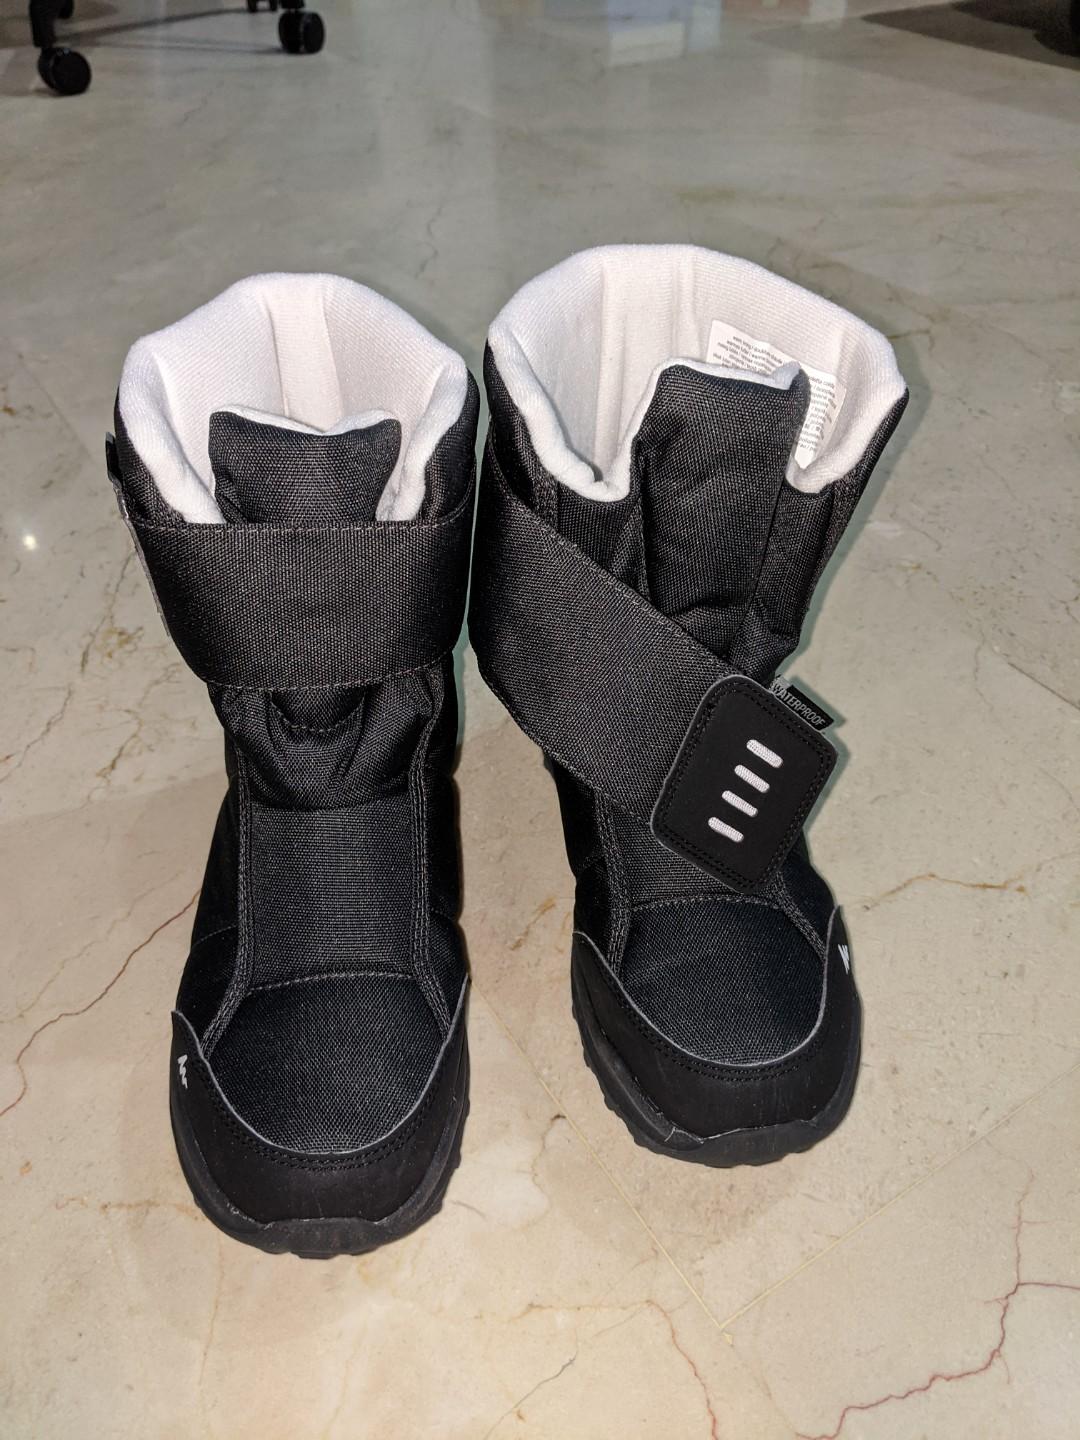 kids size 4 snow boots